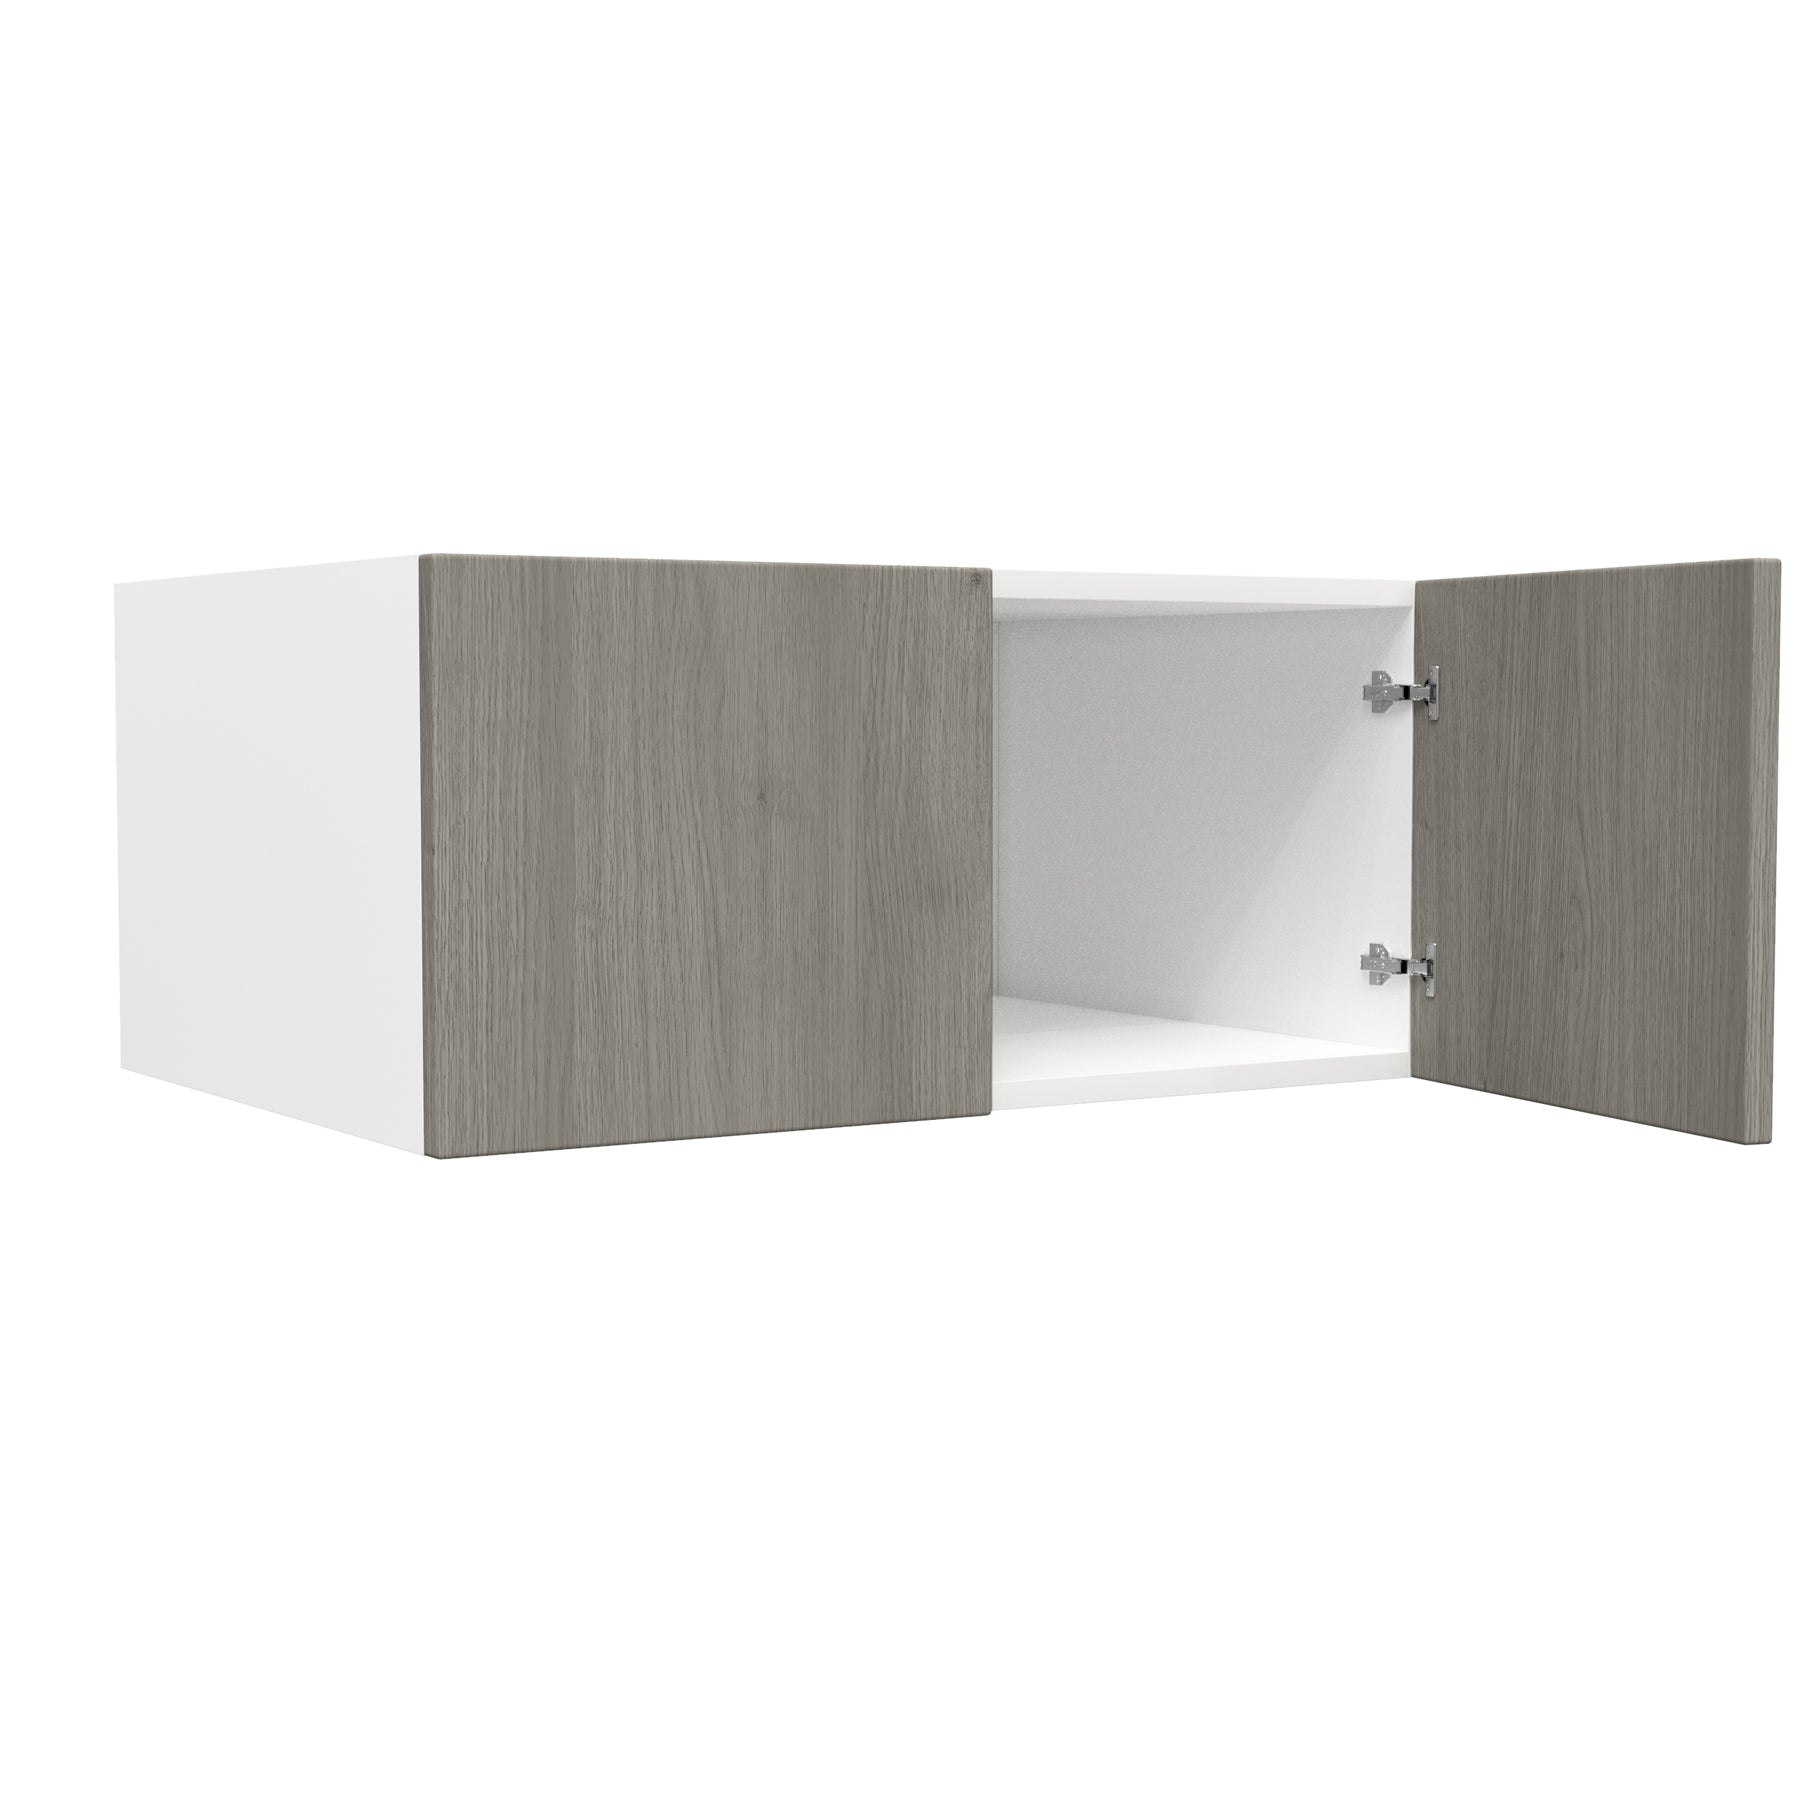 24 inch Deep Wall Cabinet| Matrix Silver | 33W x 15H x 24D